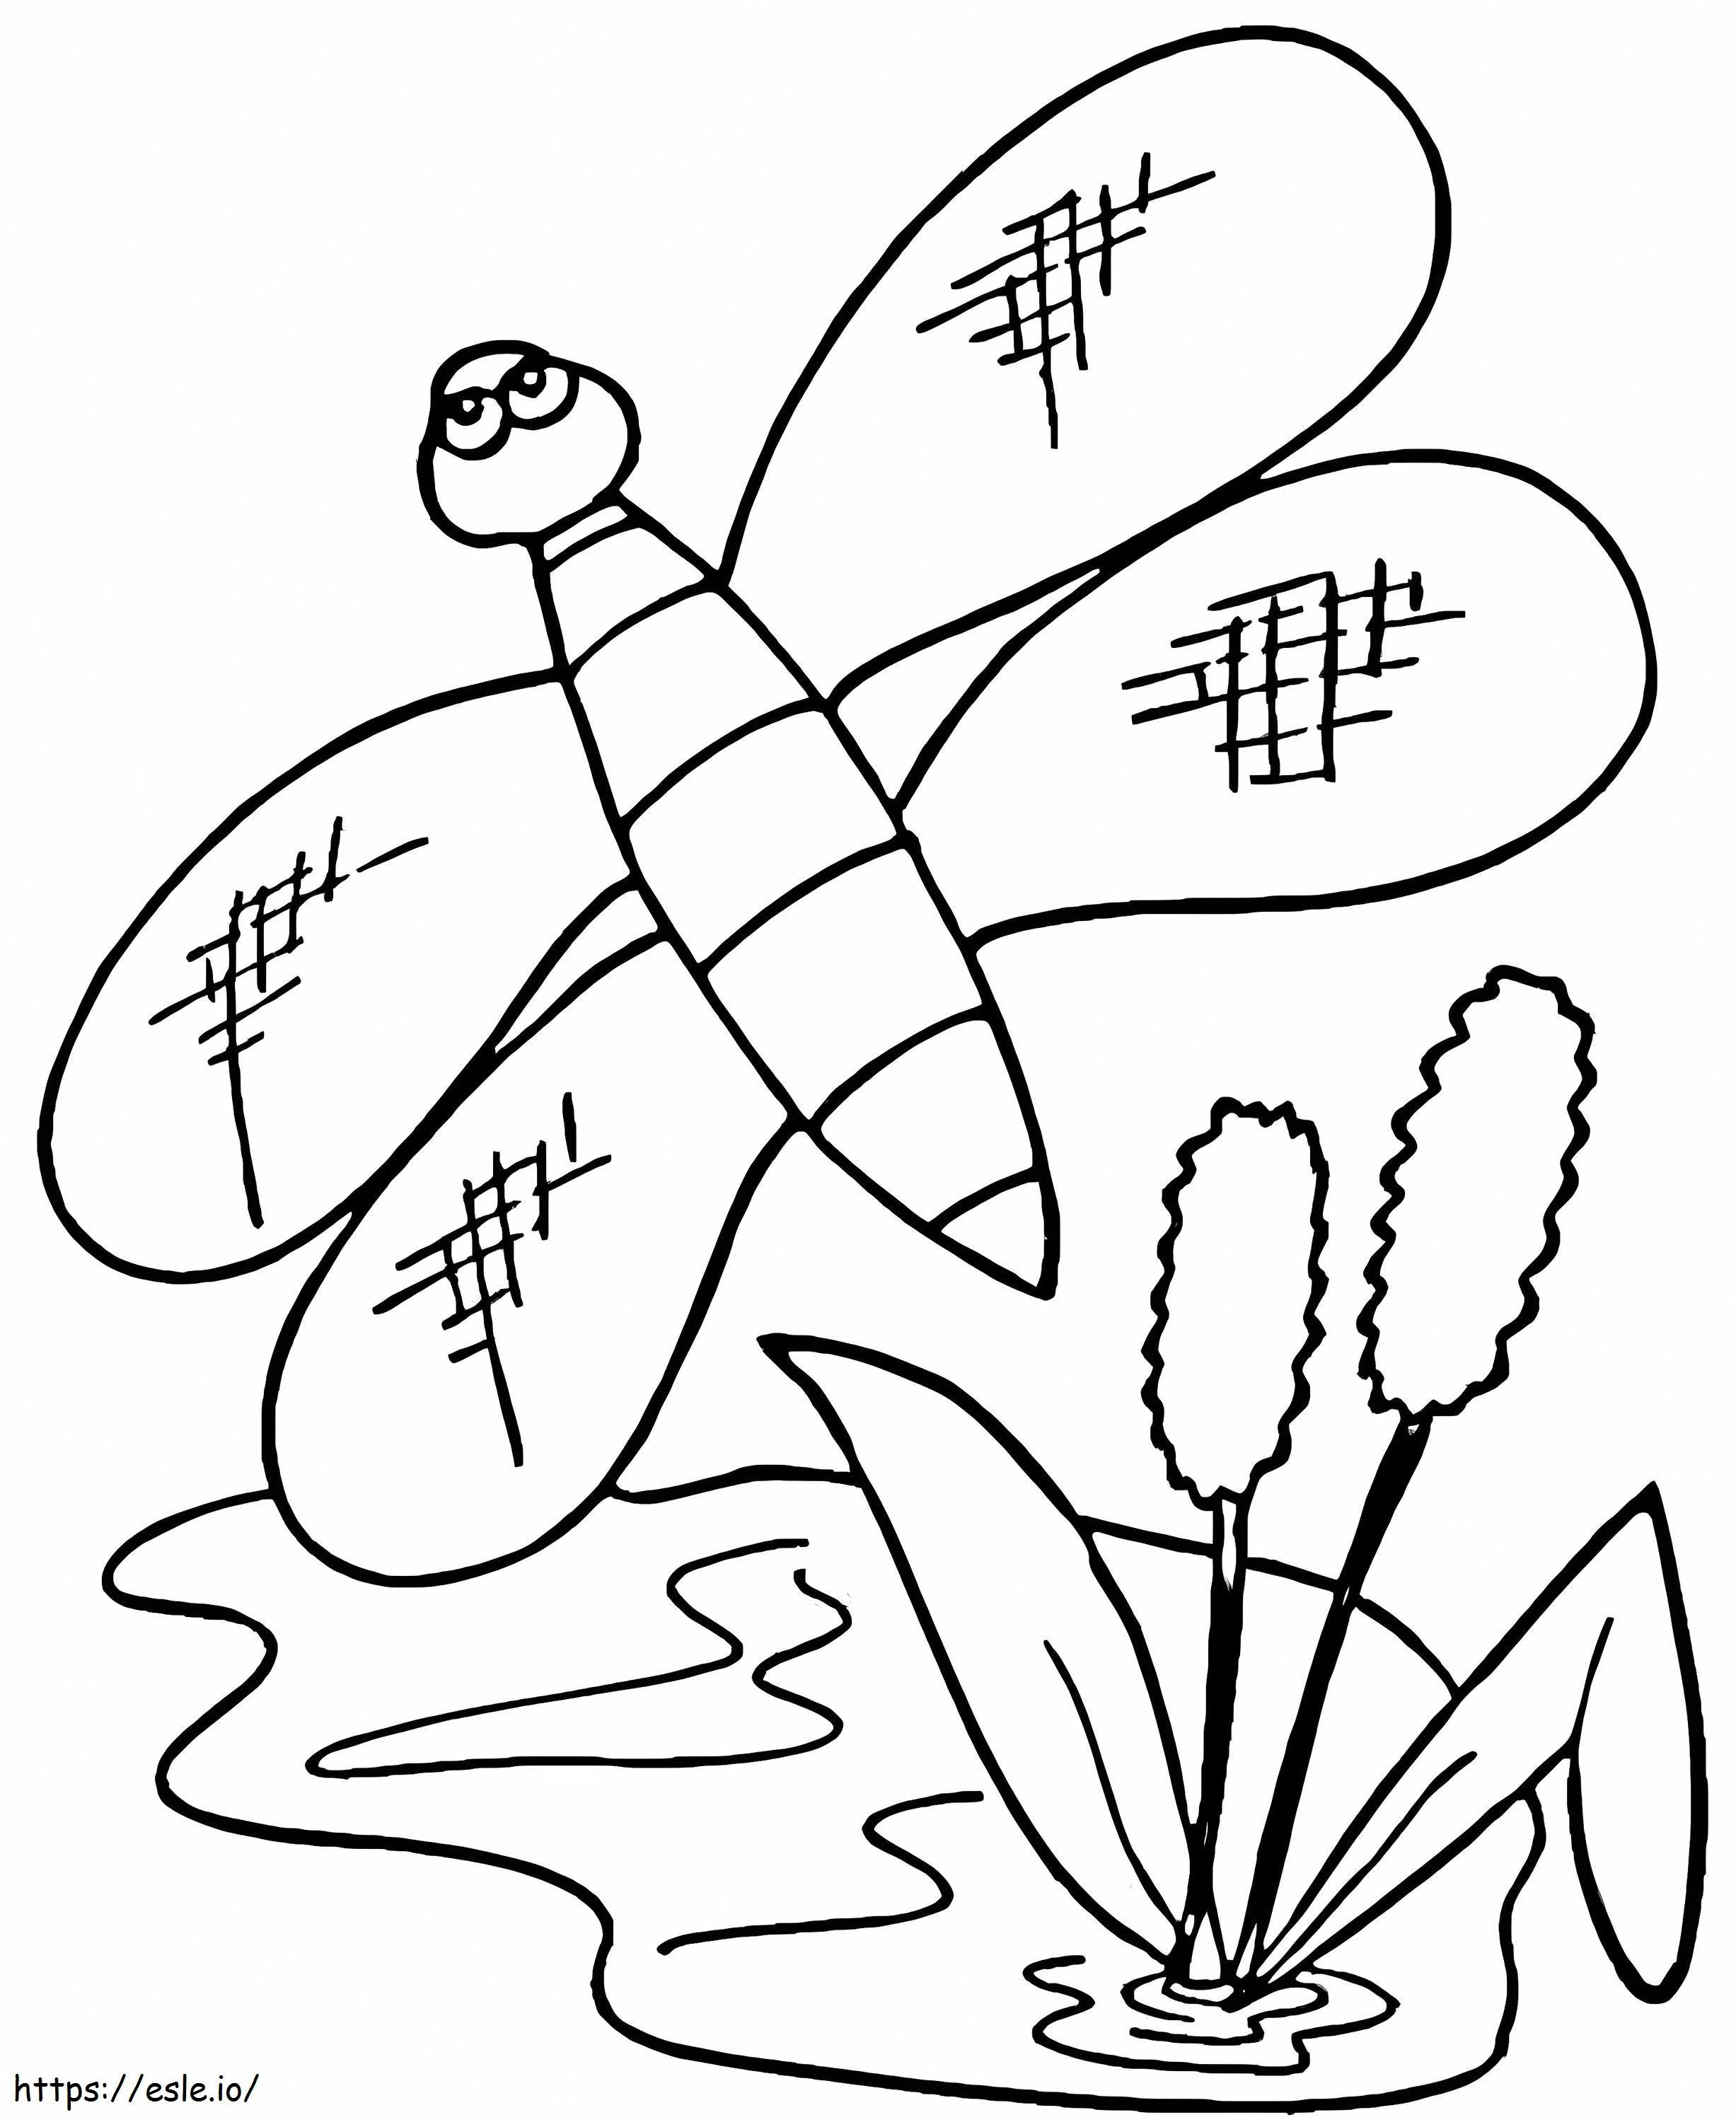 Cattails I Dragonfly kolorowanka